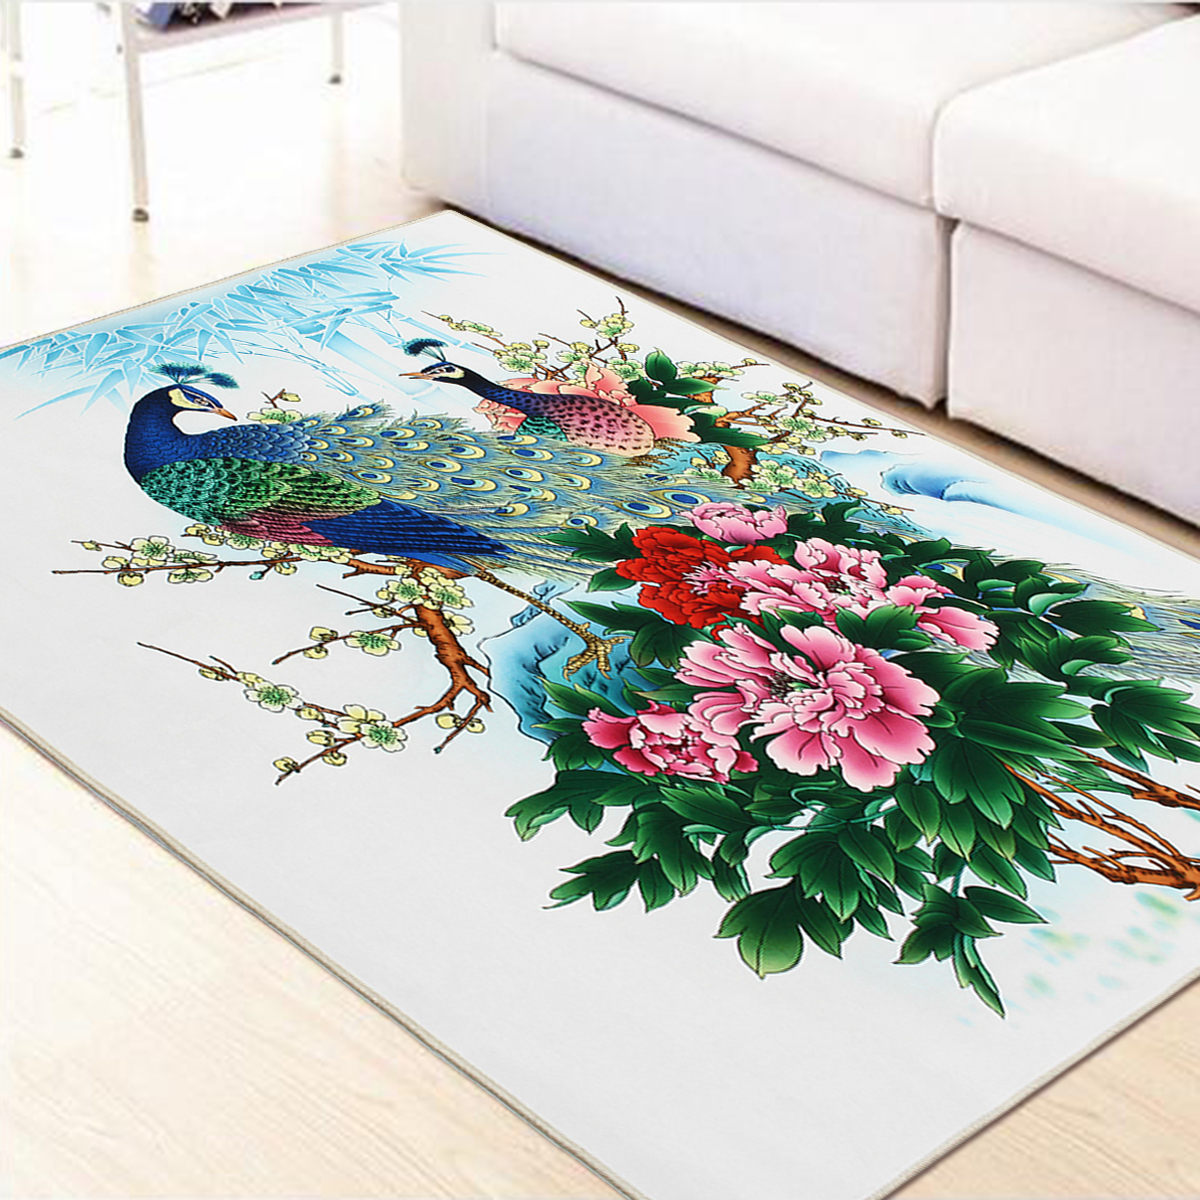 

Peacock Flower Area Floor Rug Carpet For Bedroom Living Room Home Mat Decoration